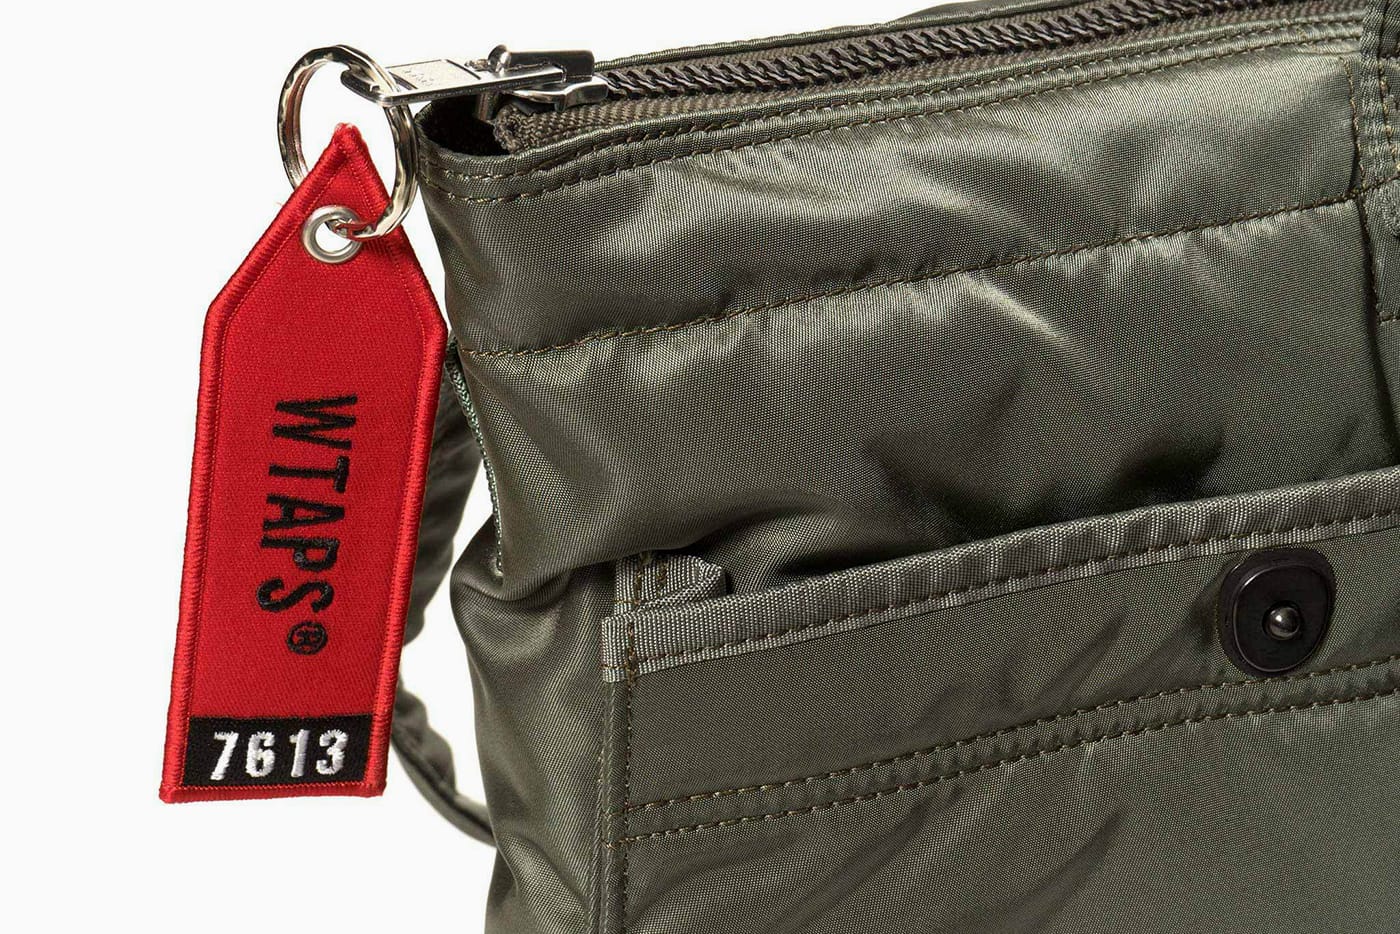 WTAPS & PORTER Military-Inspired Bag Options | Hypebeast